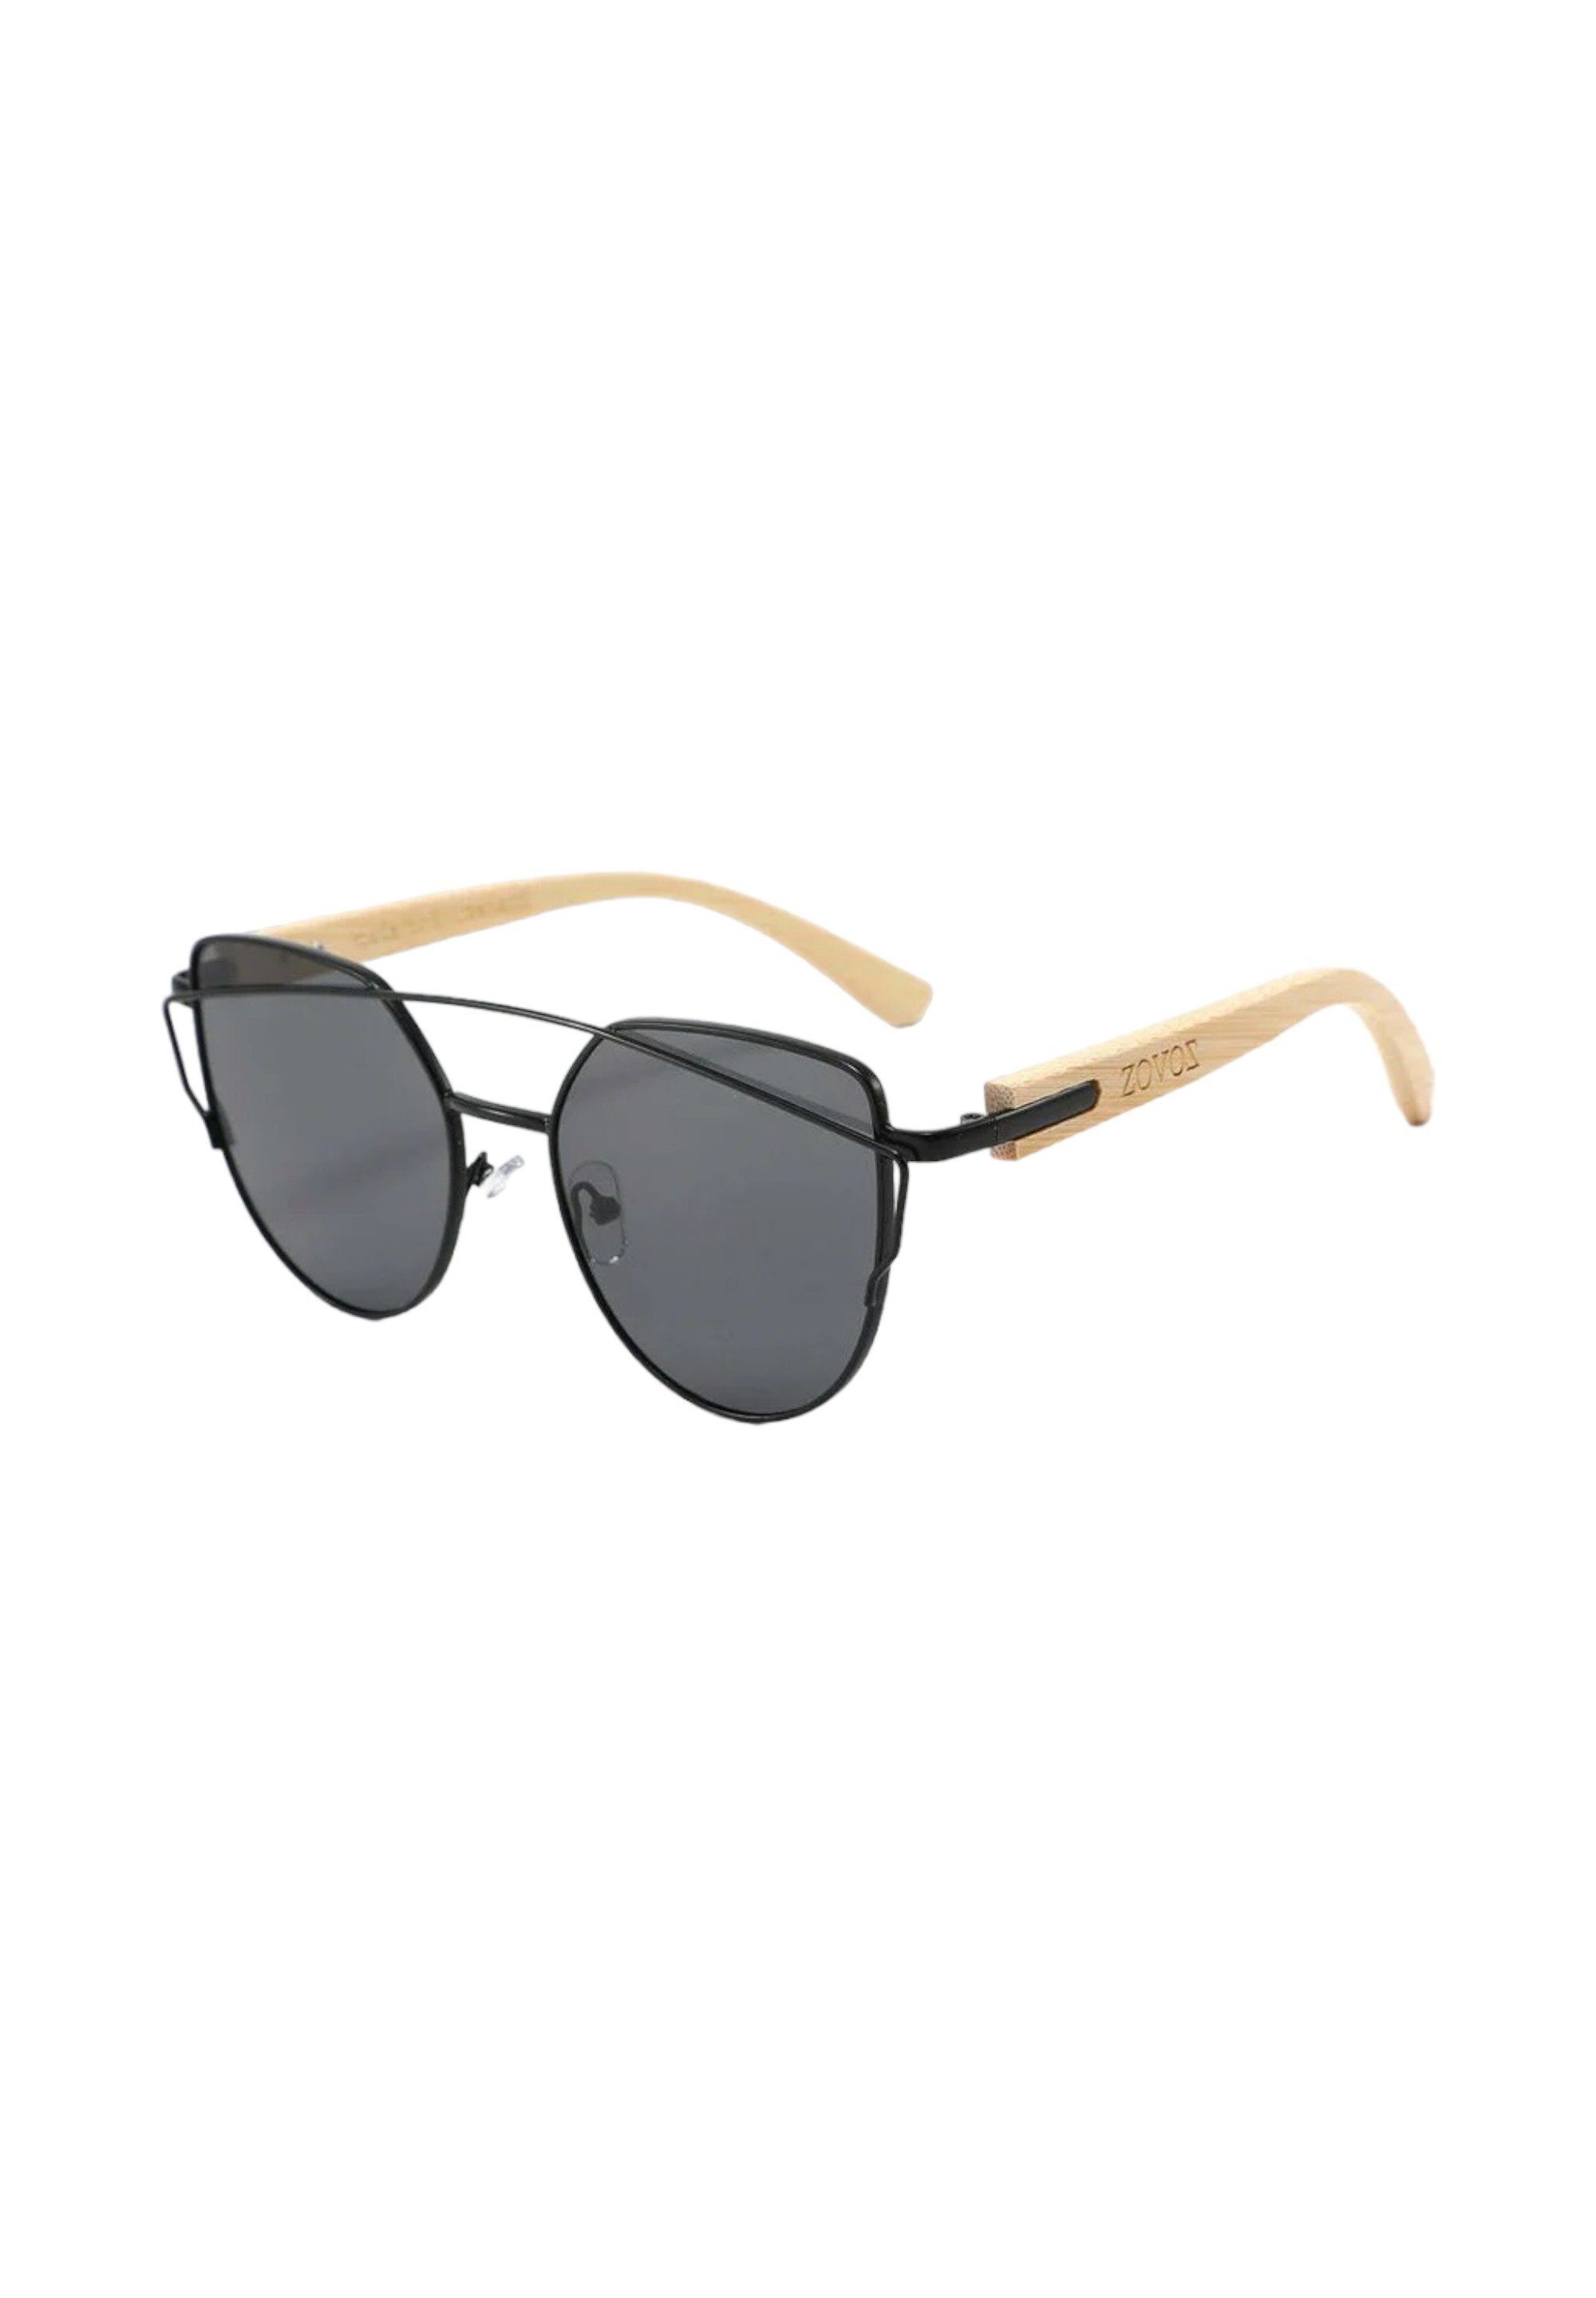 ZOVOZ Sonnenbrille Reha UV400 Schutz, Kategorie 3